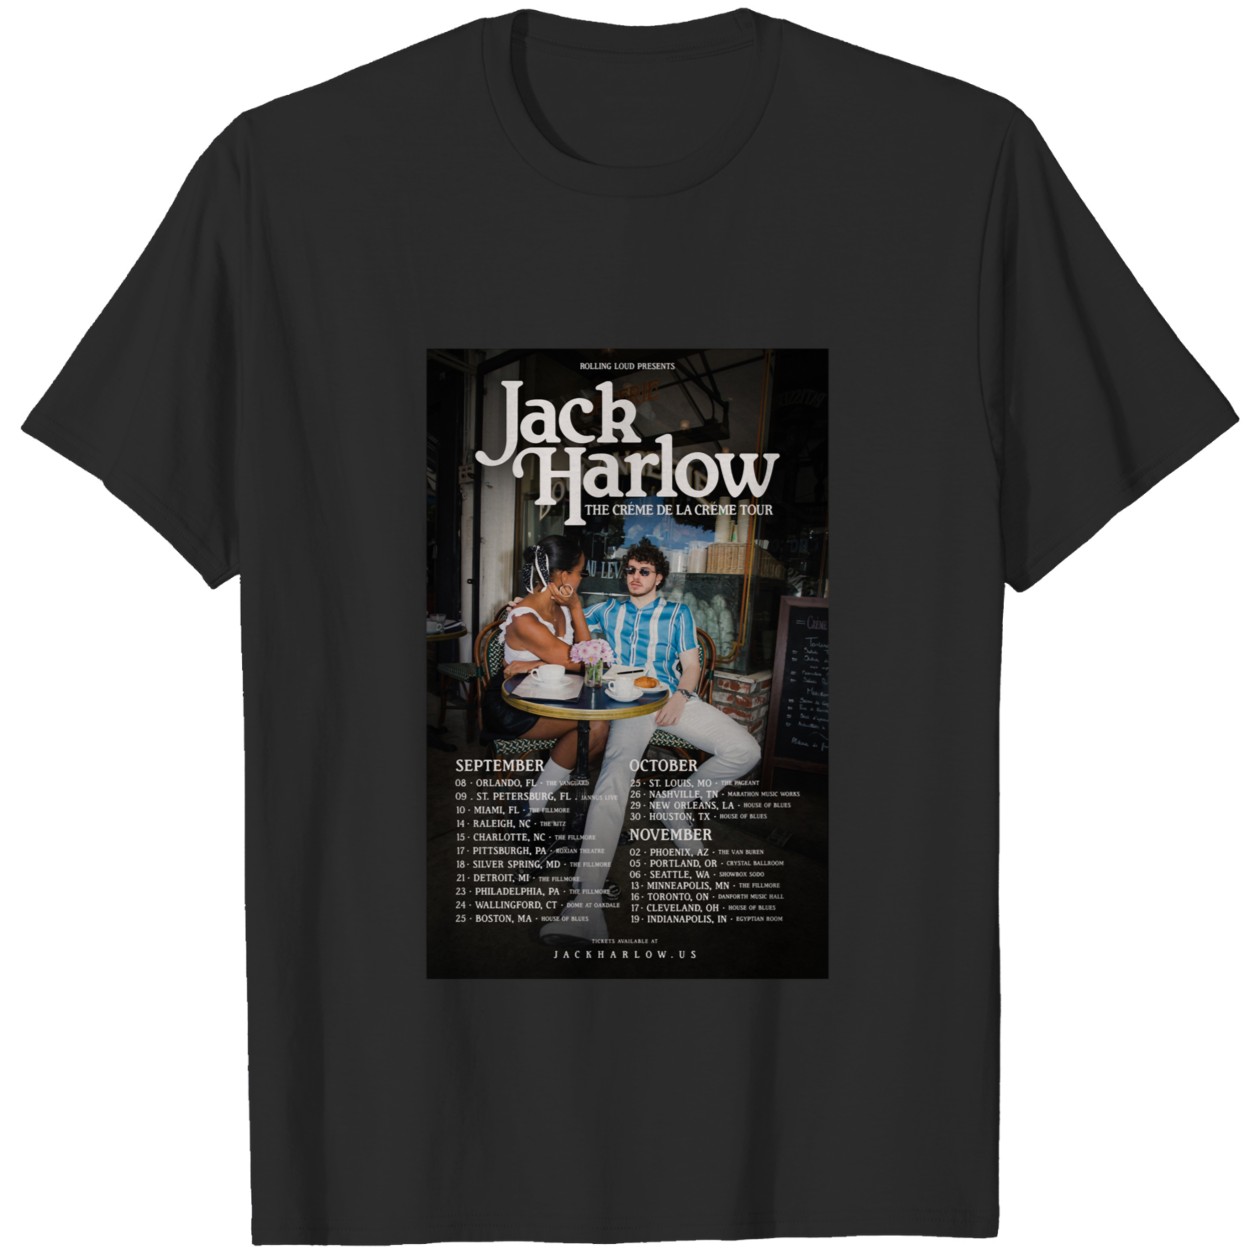 I Love Jack Harlow With Hearts Shirt DZT